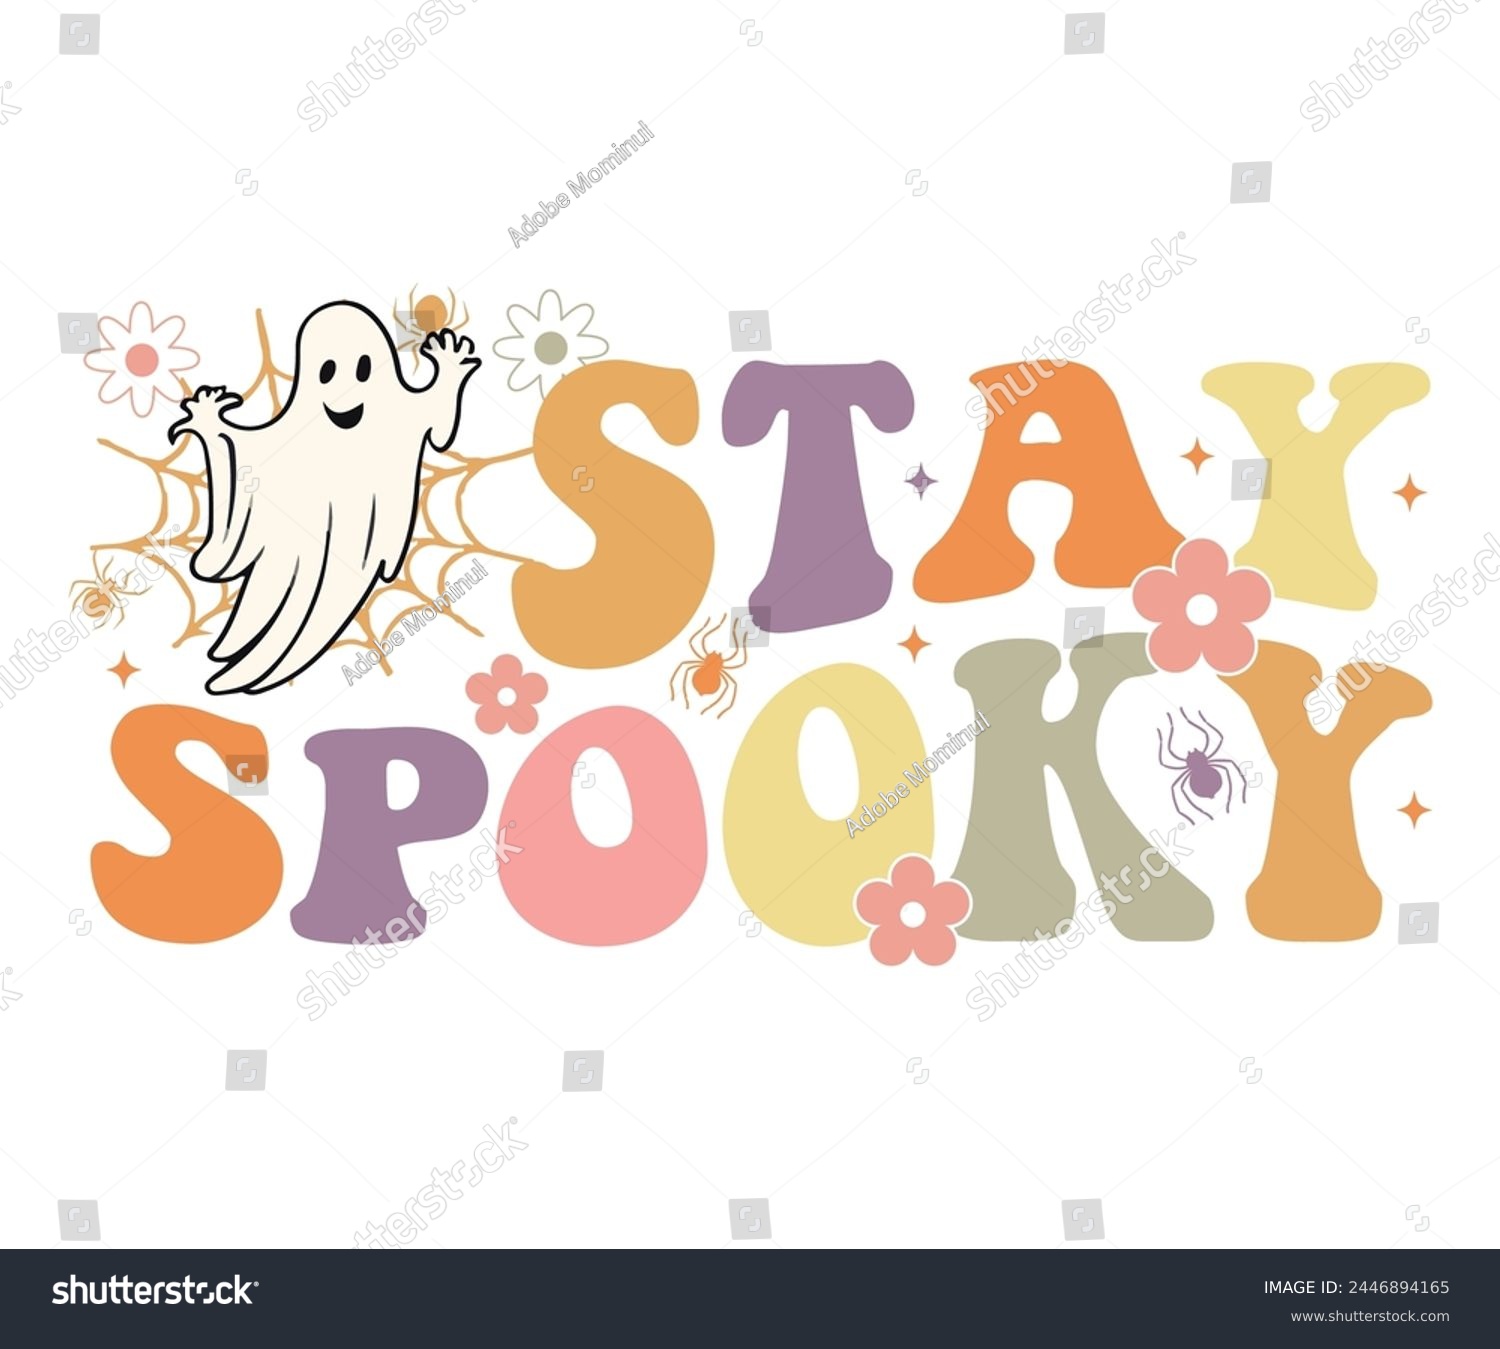 SVG of Stay Spooky Retro Svg,Halloween Svg,Typography,Halloween Quotes,Witches Svg,Halloween Party,Halloween Costume,Halloween Gift,Funny Halloween,Spooky Svg,Funny T shirt,Ghost Svg,Cut file svg